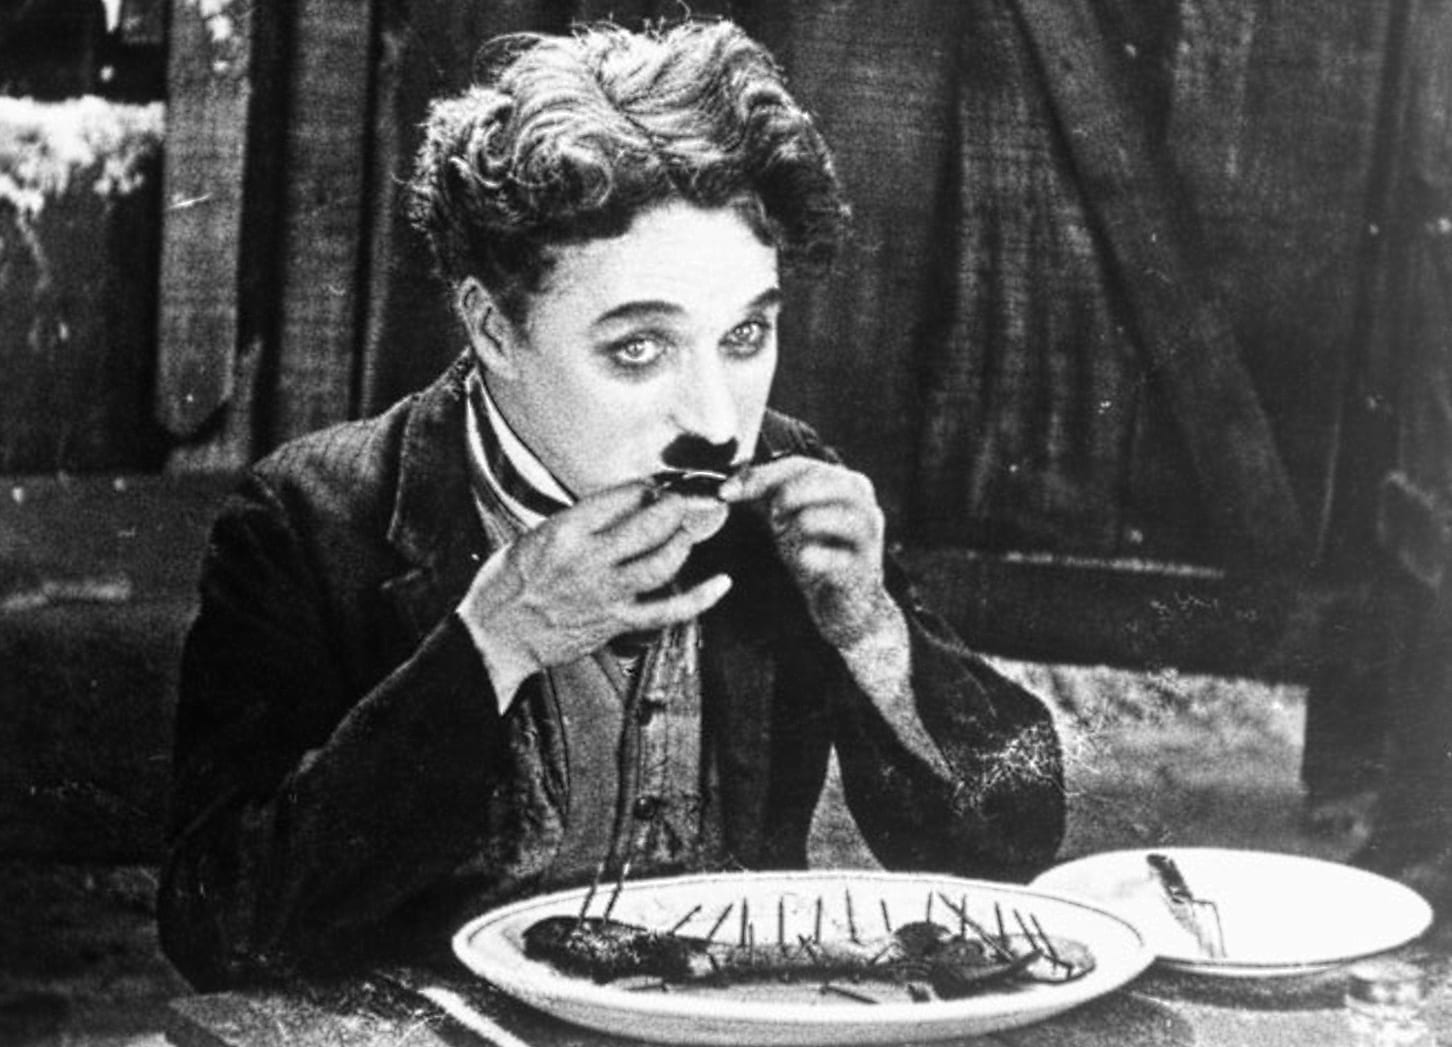 Chaplin the gold rush boot